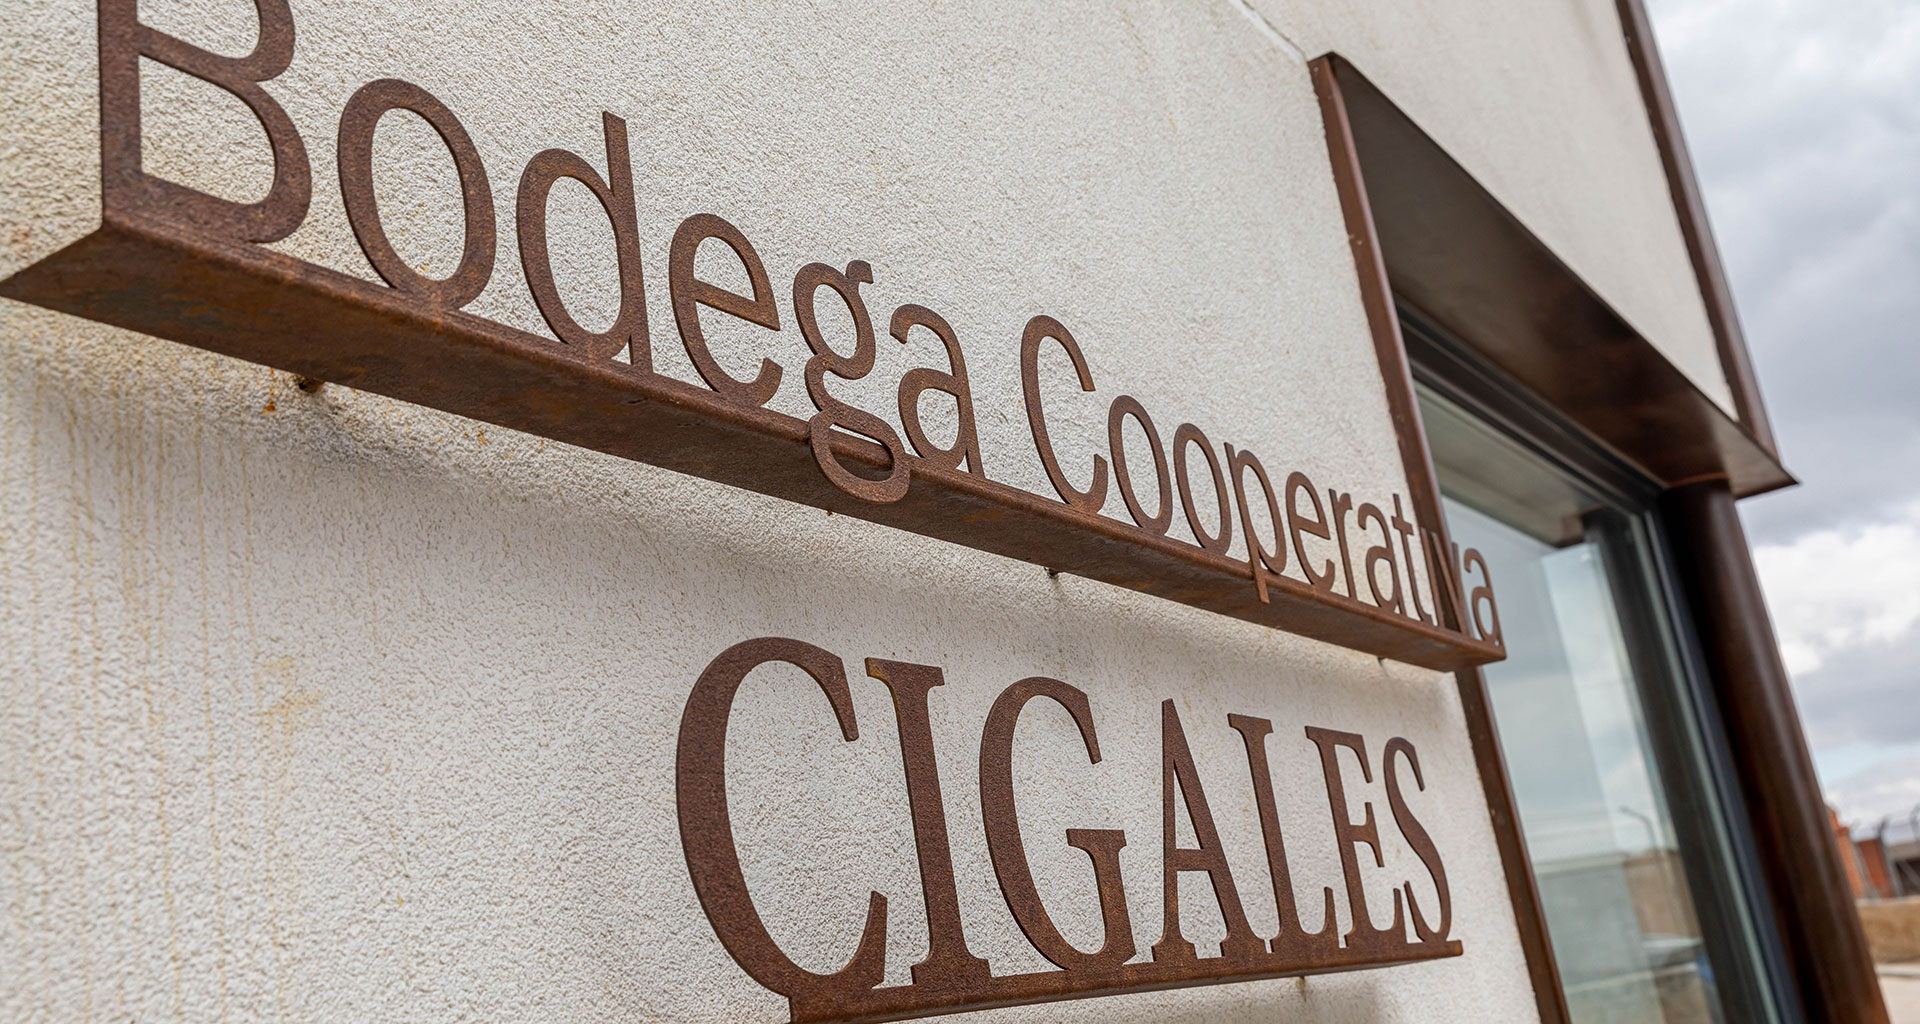 Rótulo exterior Bodega Cooperativa Cigales